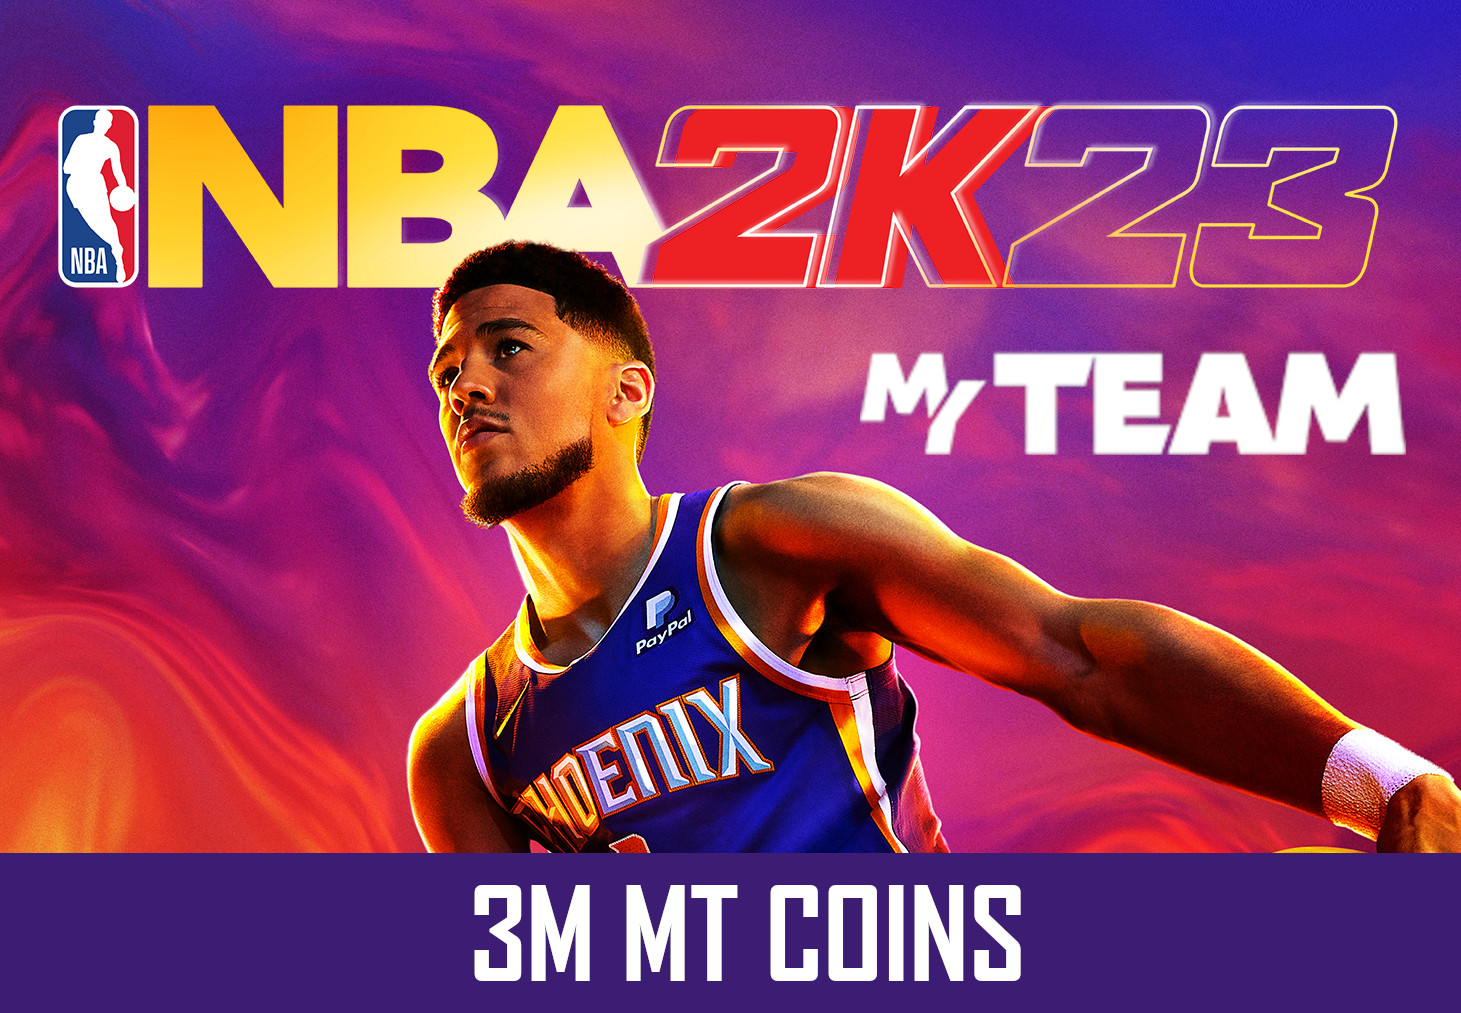 NBA 2K23 - 3M MT Coins - GLOBAL XBOX One/Series X|S